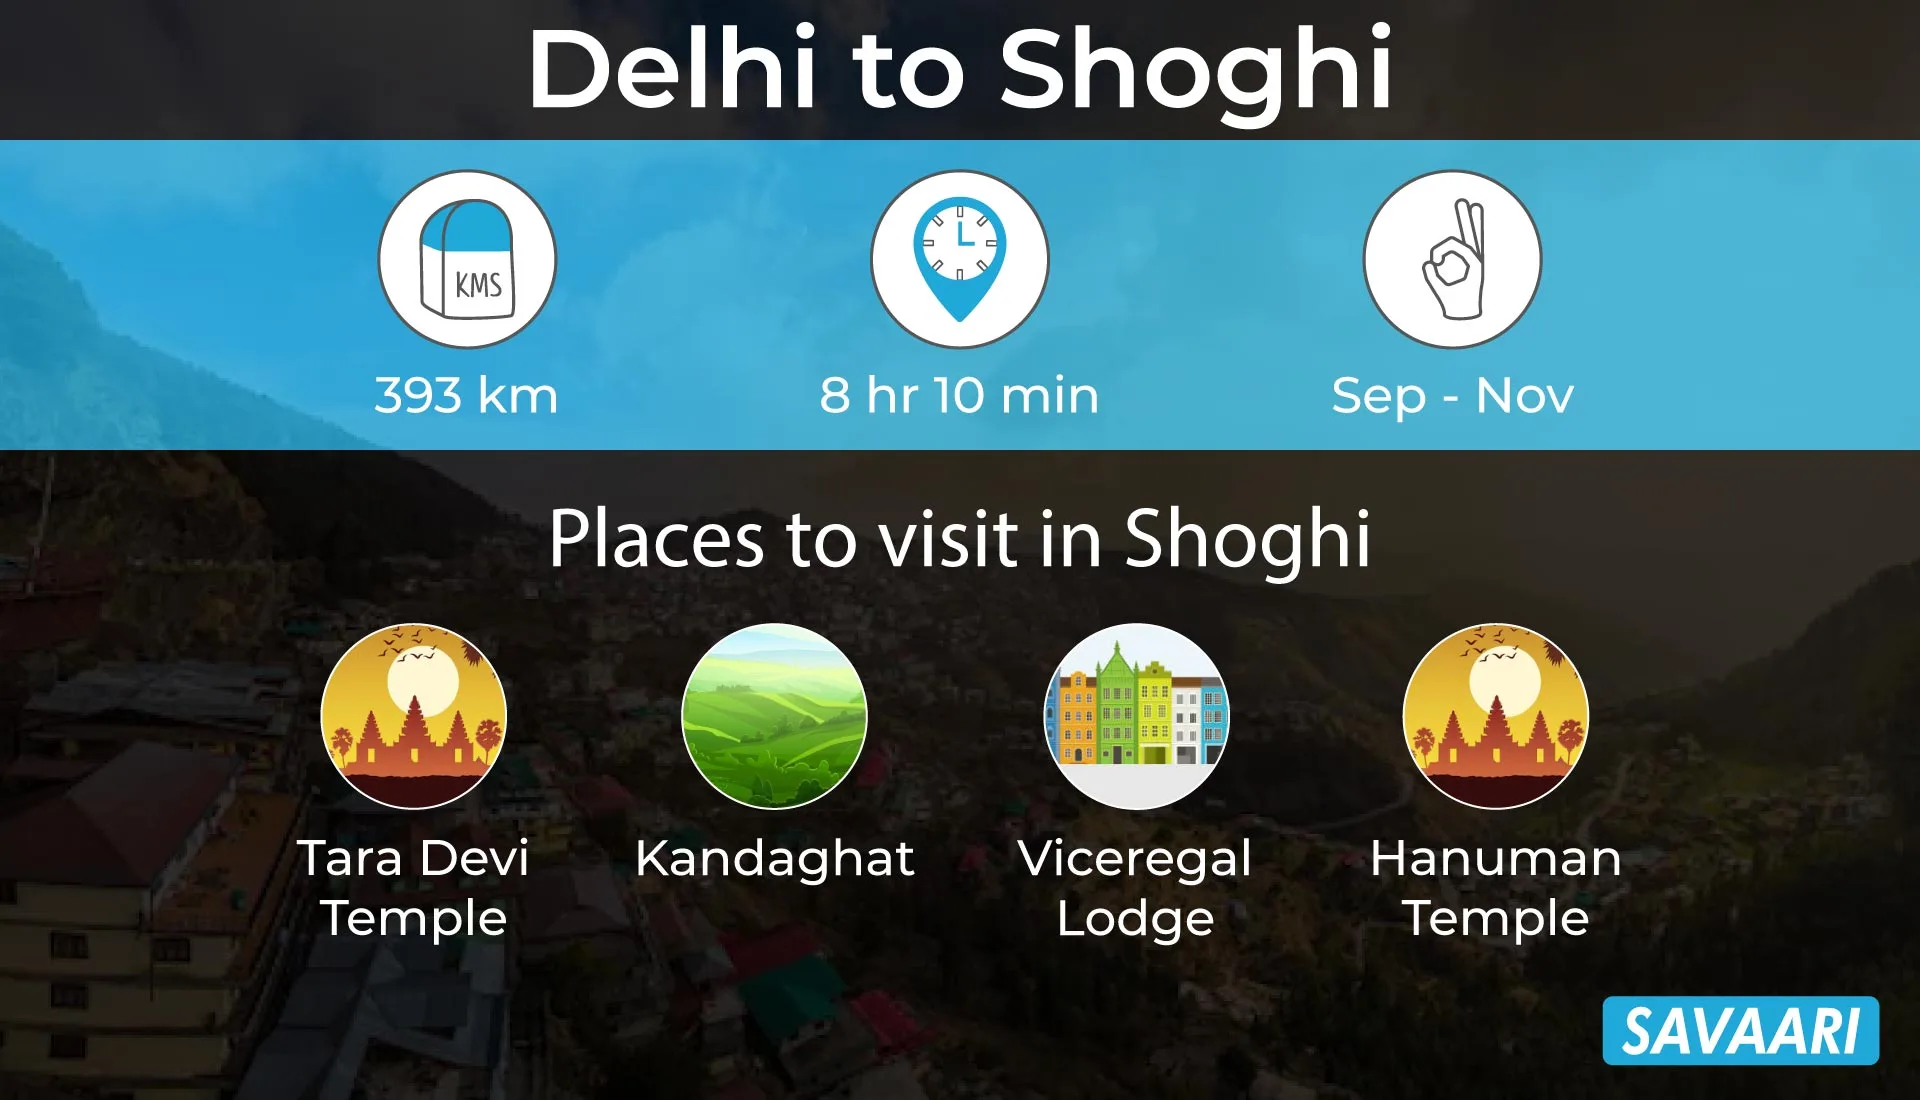 Delhi to Shoghi weekend getaway